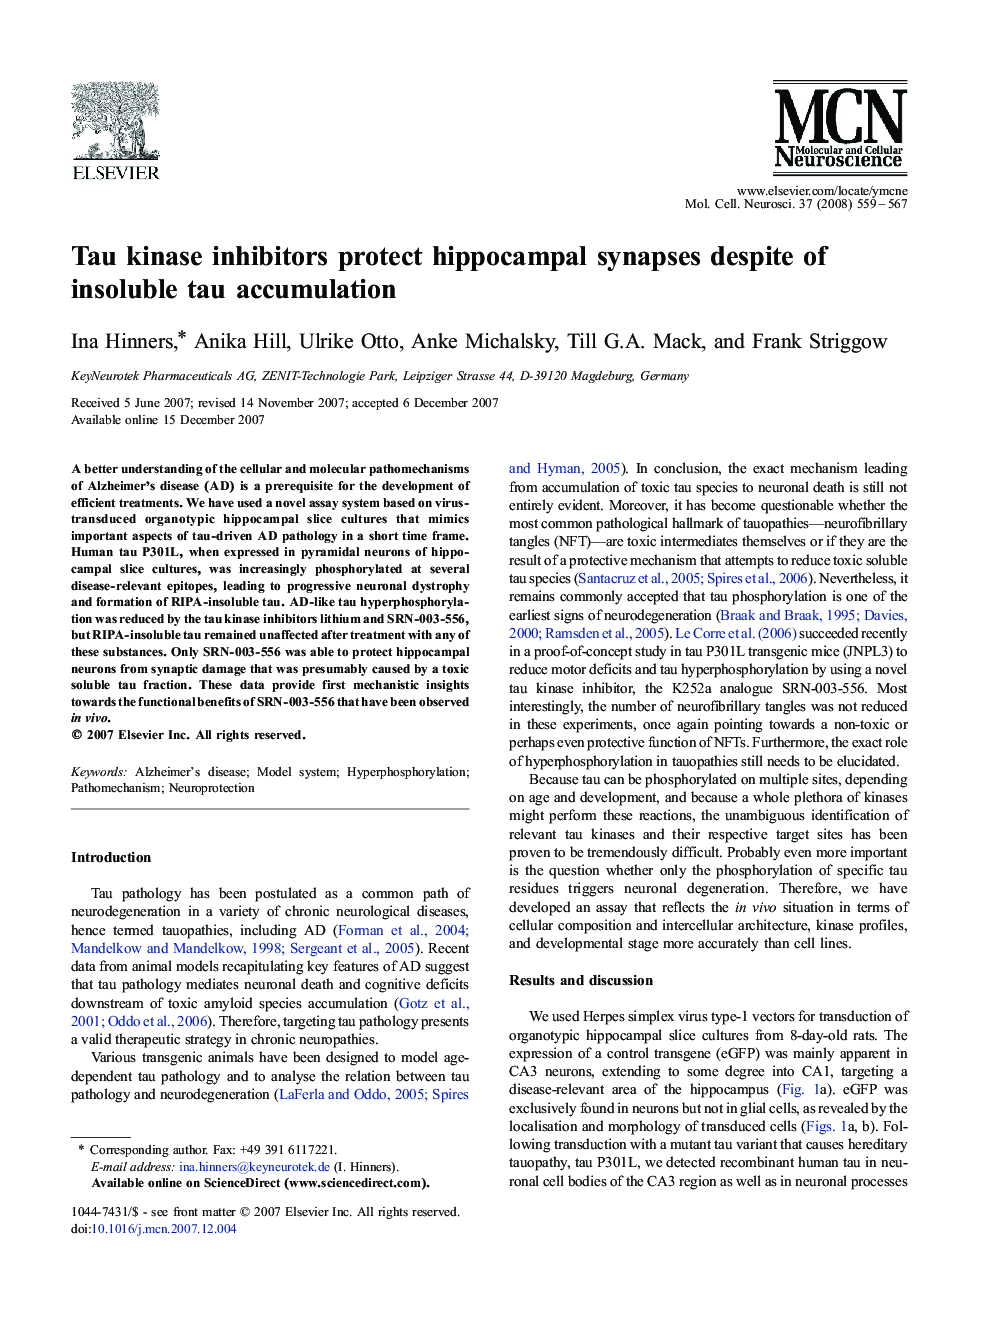 Tau kinase inhibitors protect hippocampal synapses despite of insoluble tau accumulation